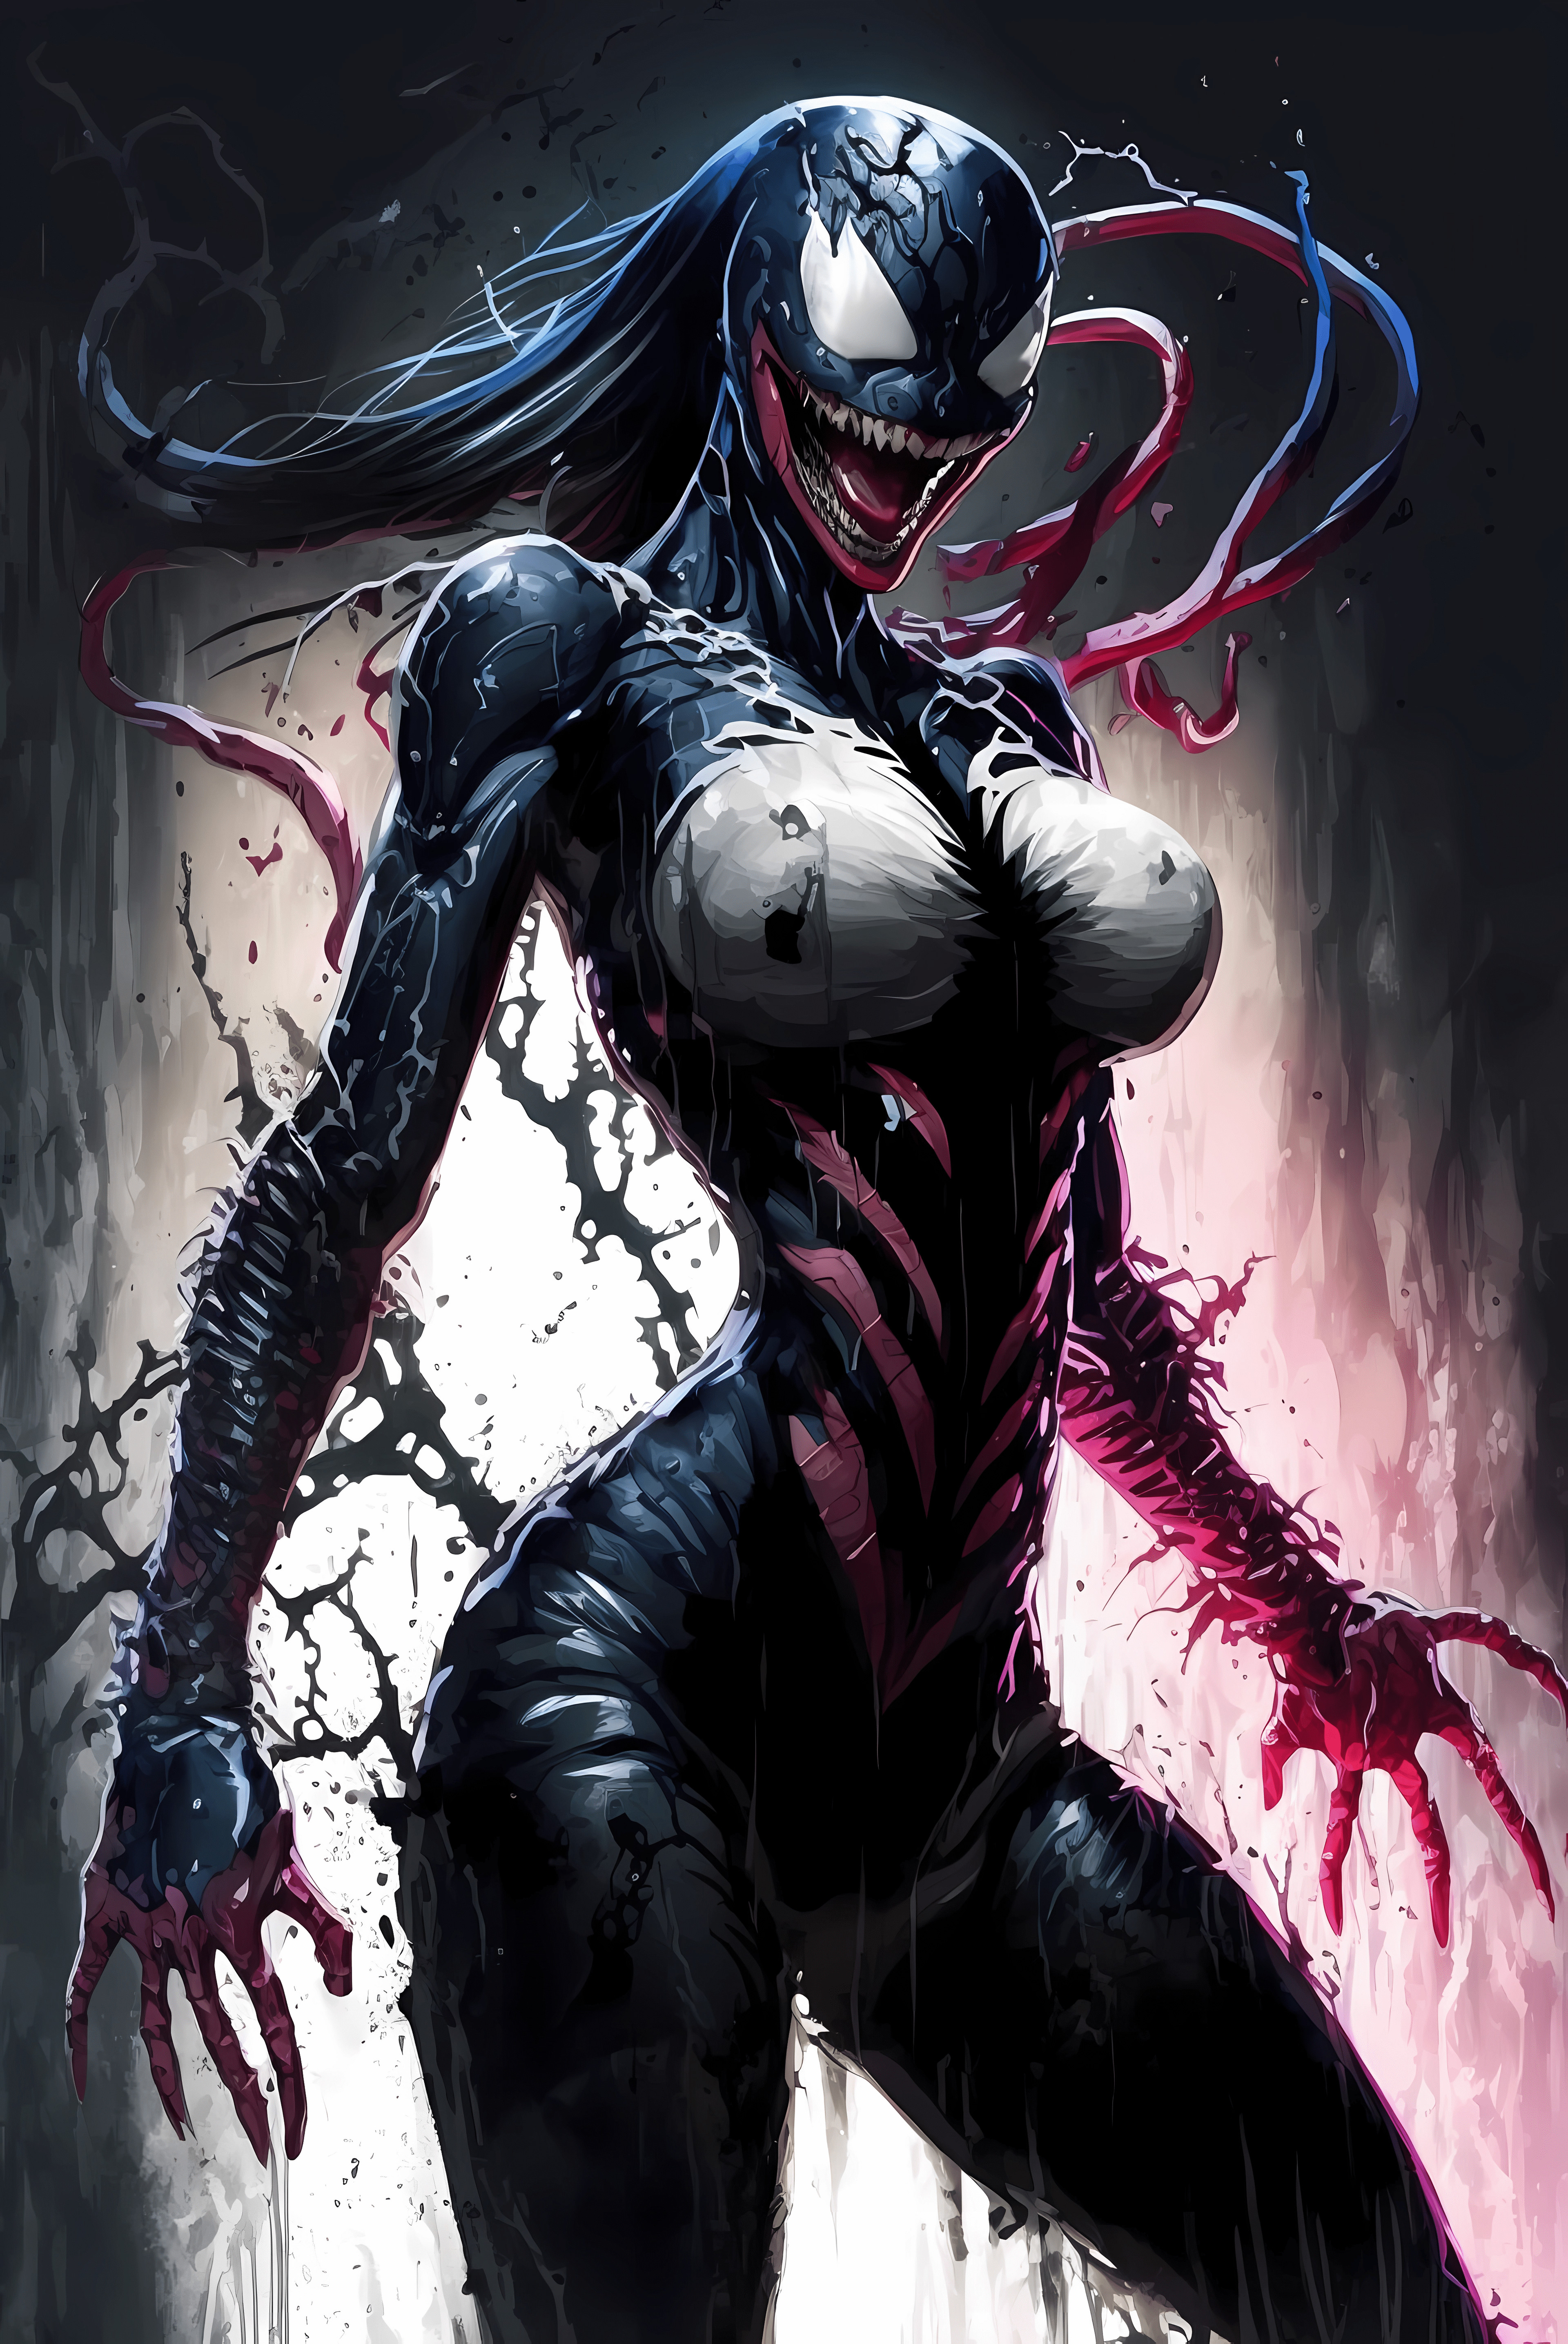 General 3840x5741 women fantasy art creature artwork she-venom AI art portrait display